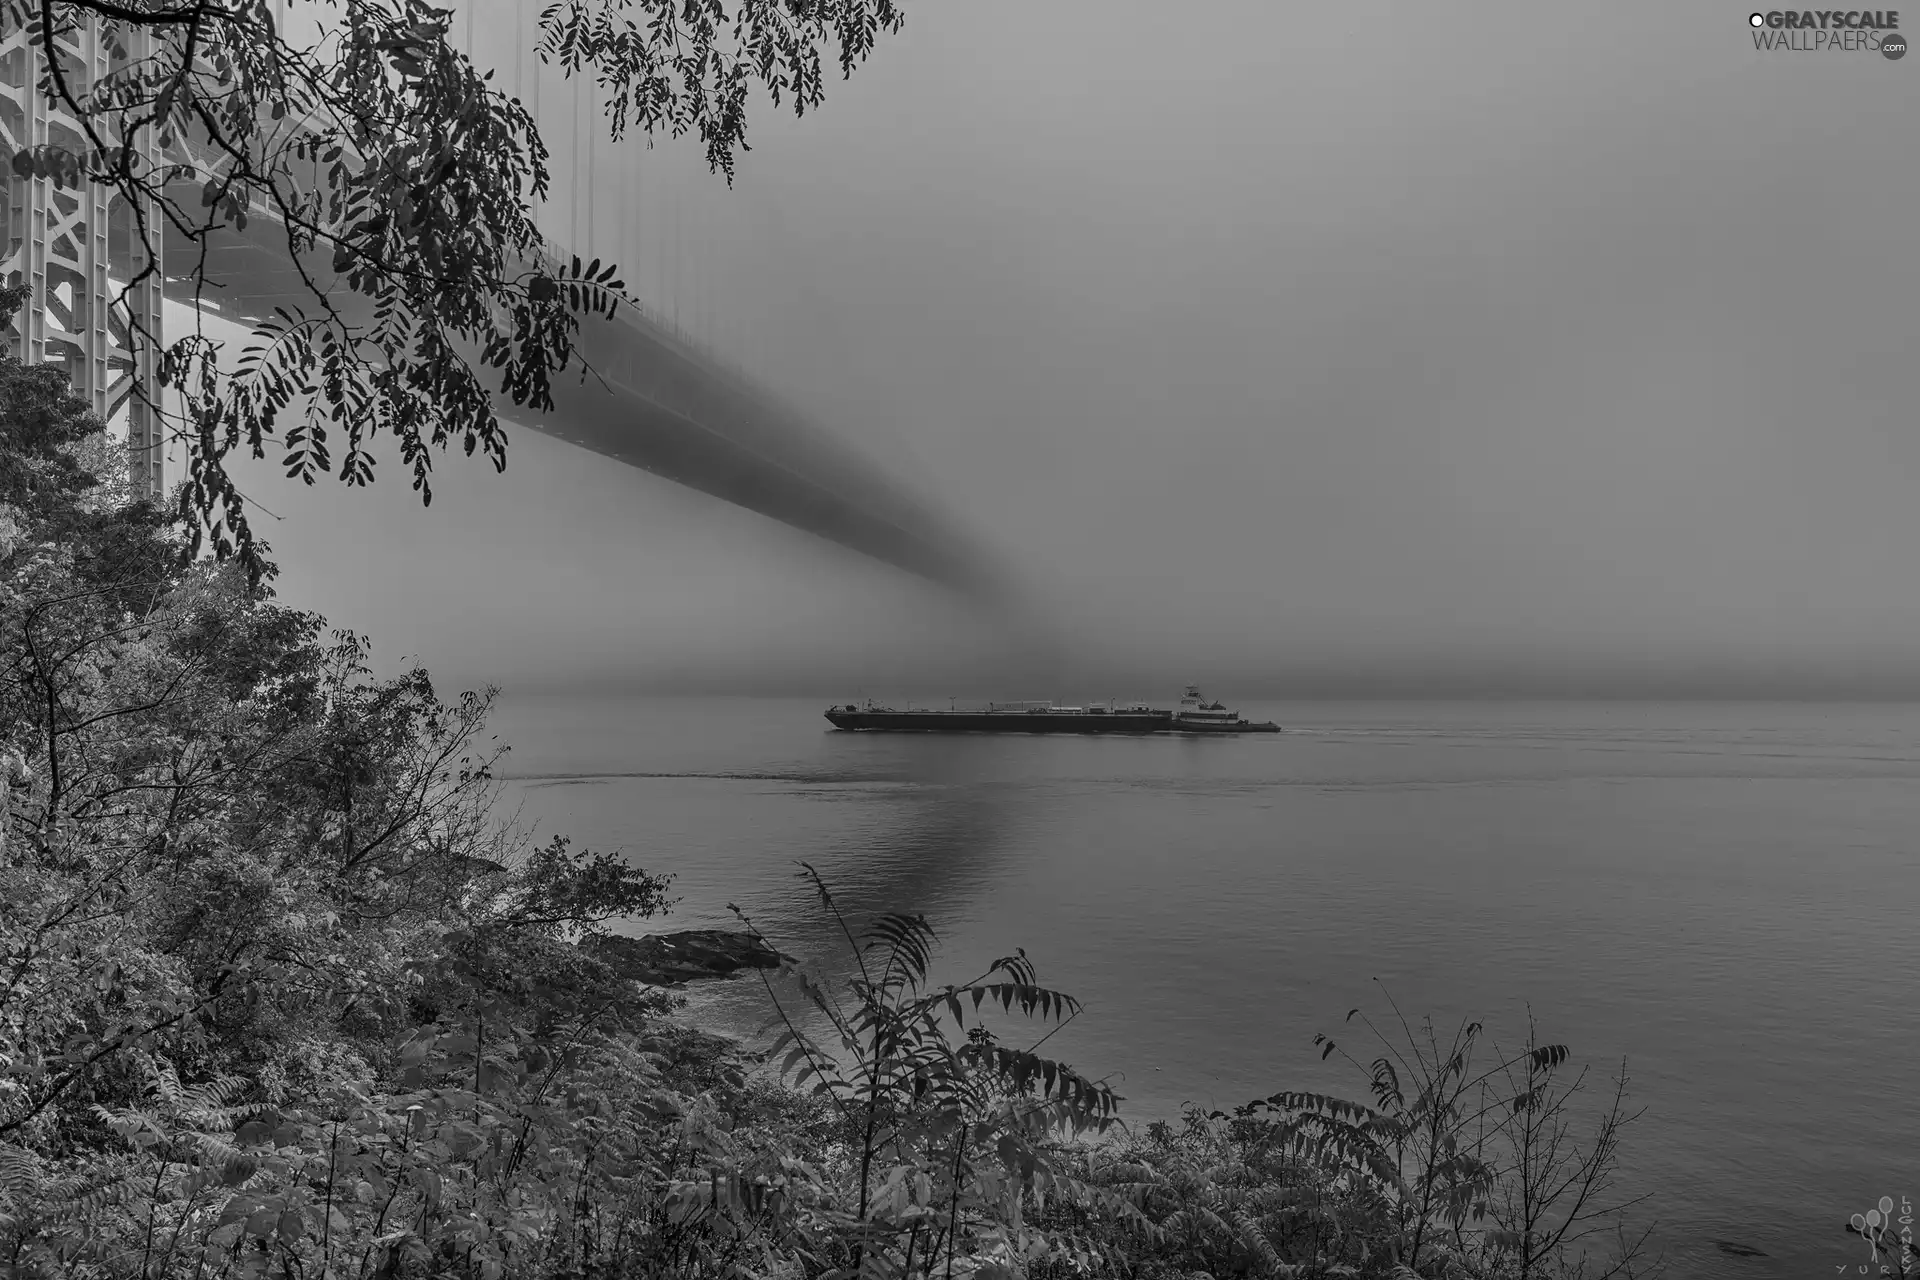 Fog, Plants, Ship, bridge, River